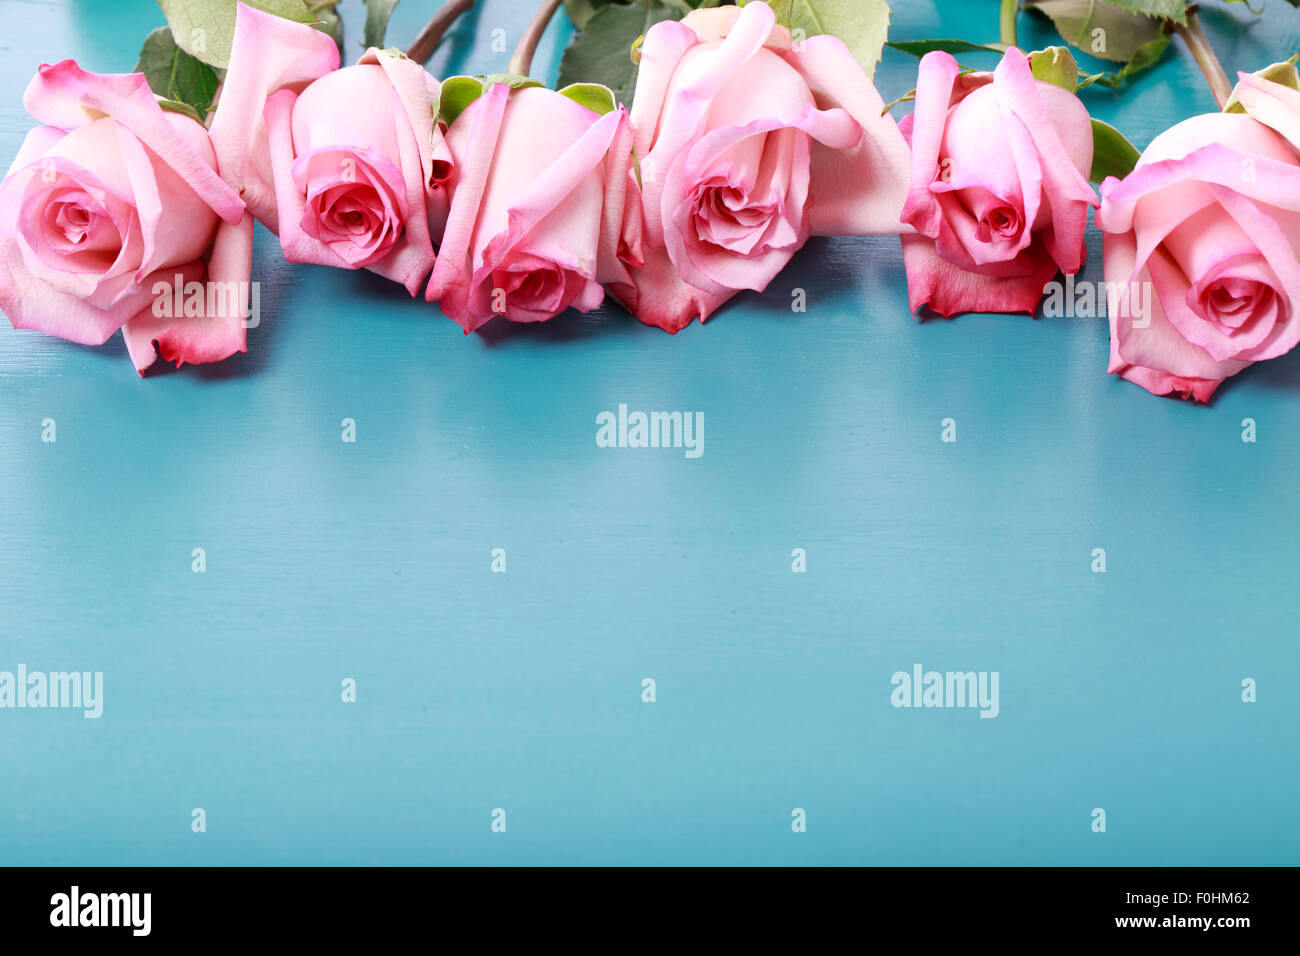 Schöne rosa Rosen auf türkis blauem Holzbrett Stockfoto